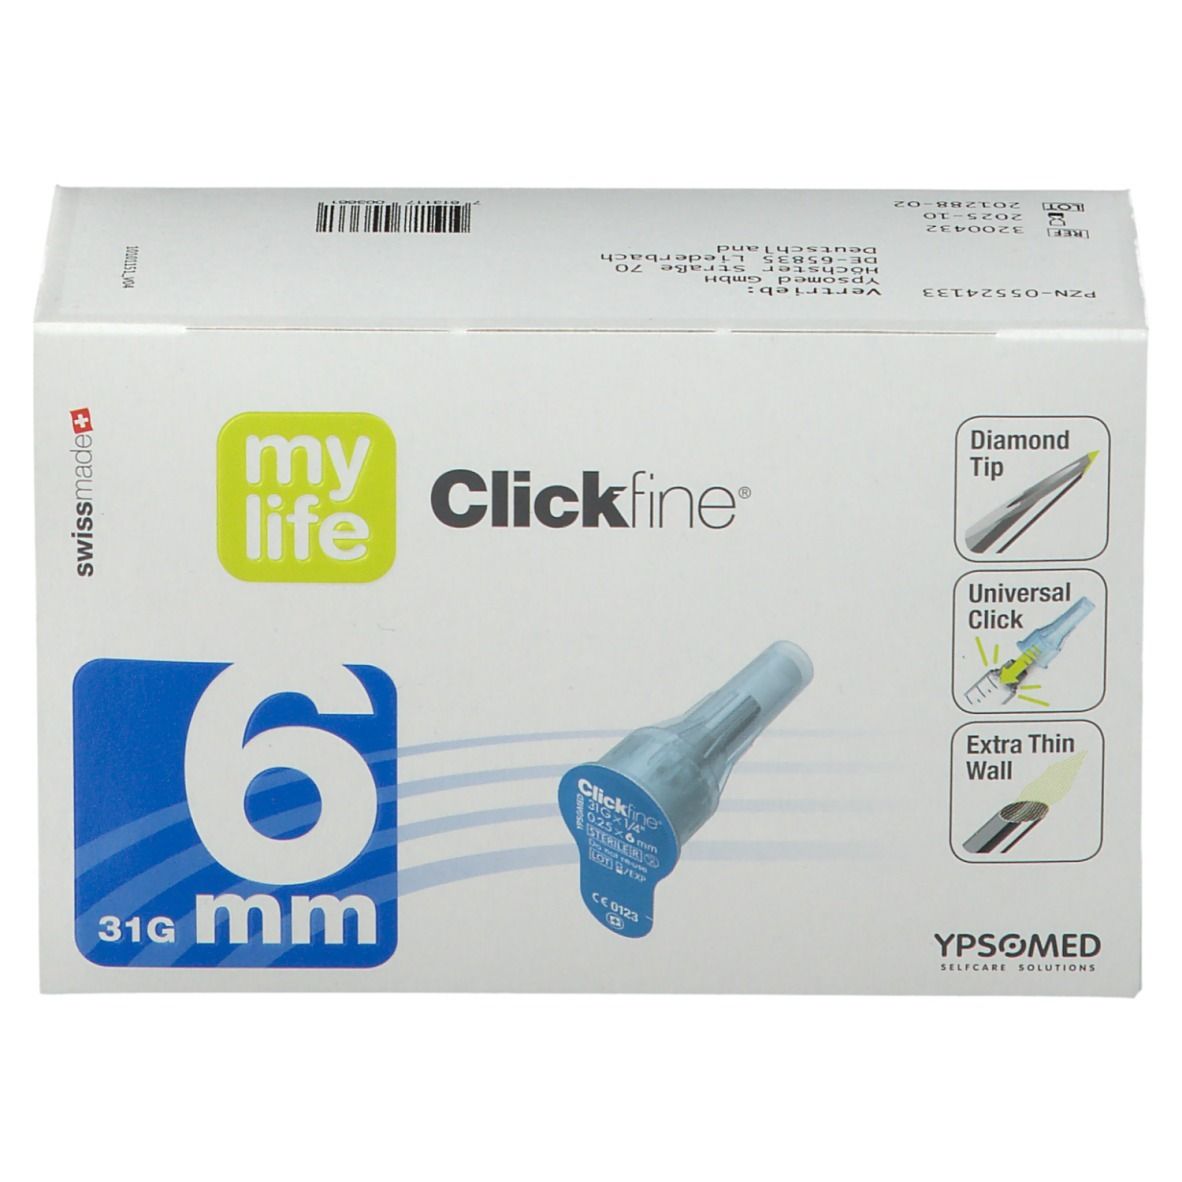 mylife Clickfine® 6 mm Kanülen